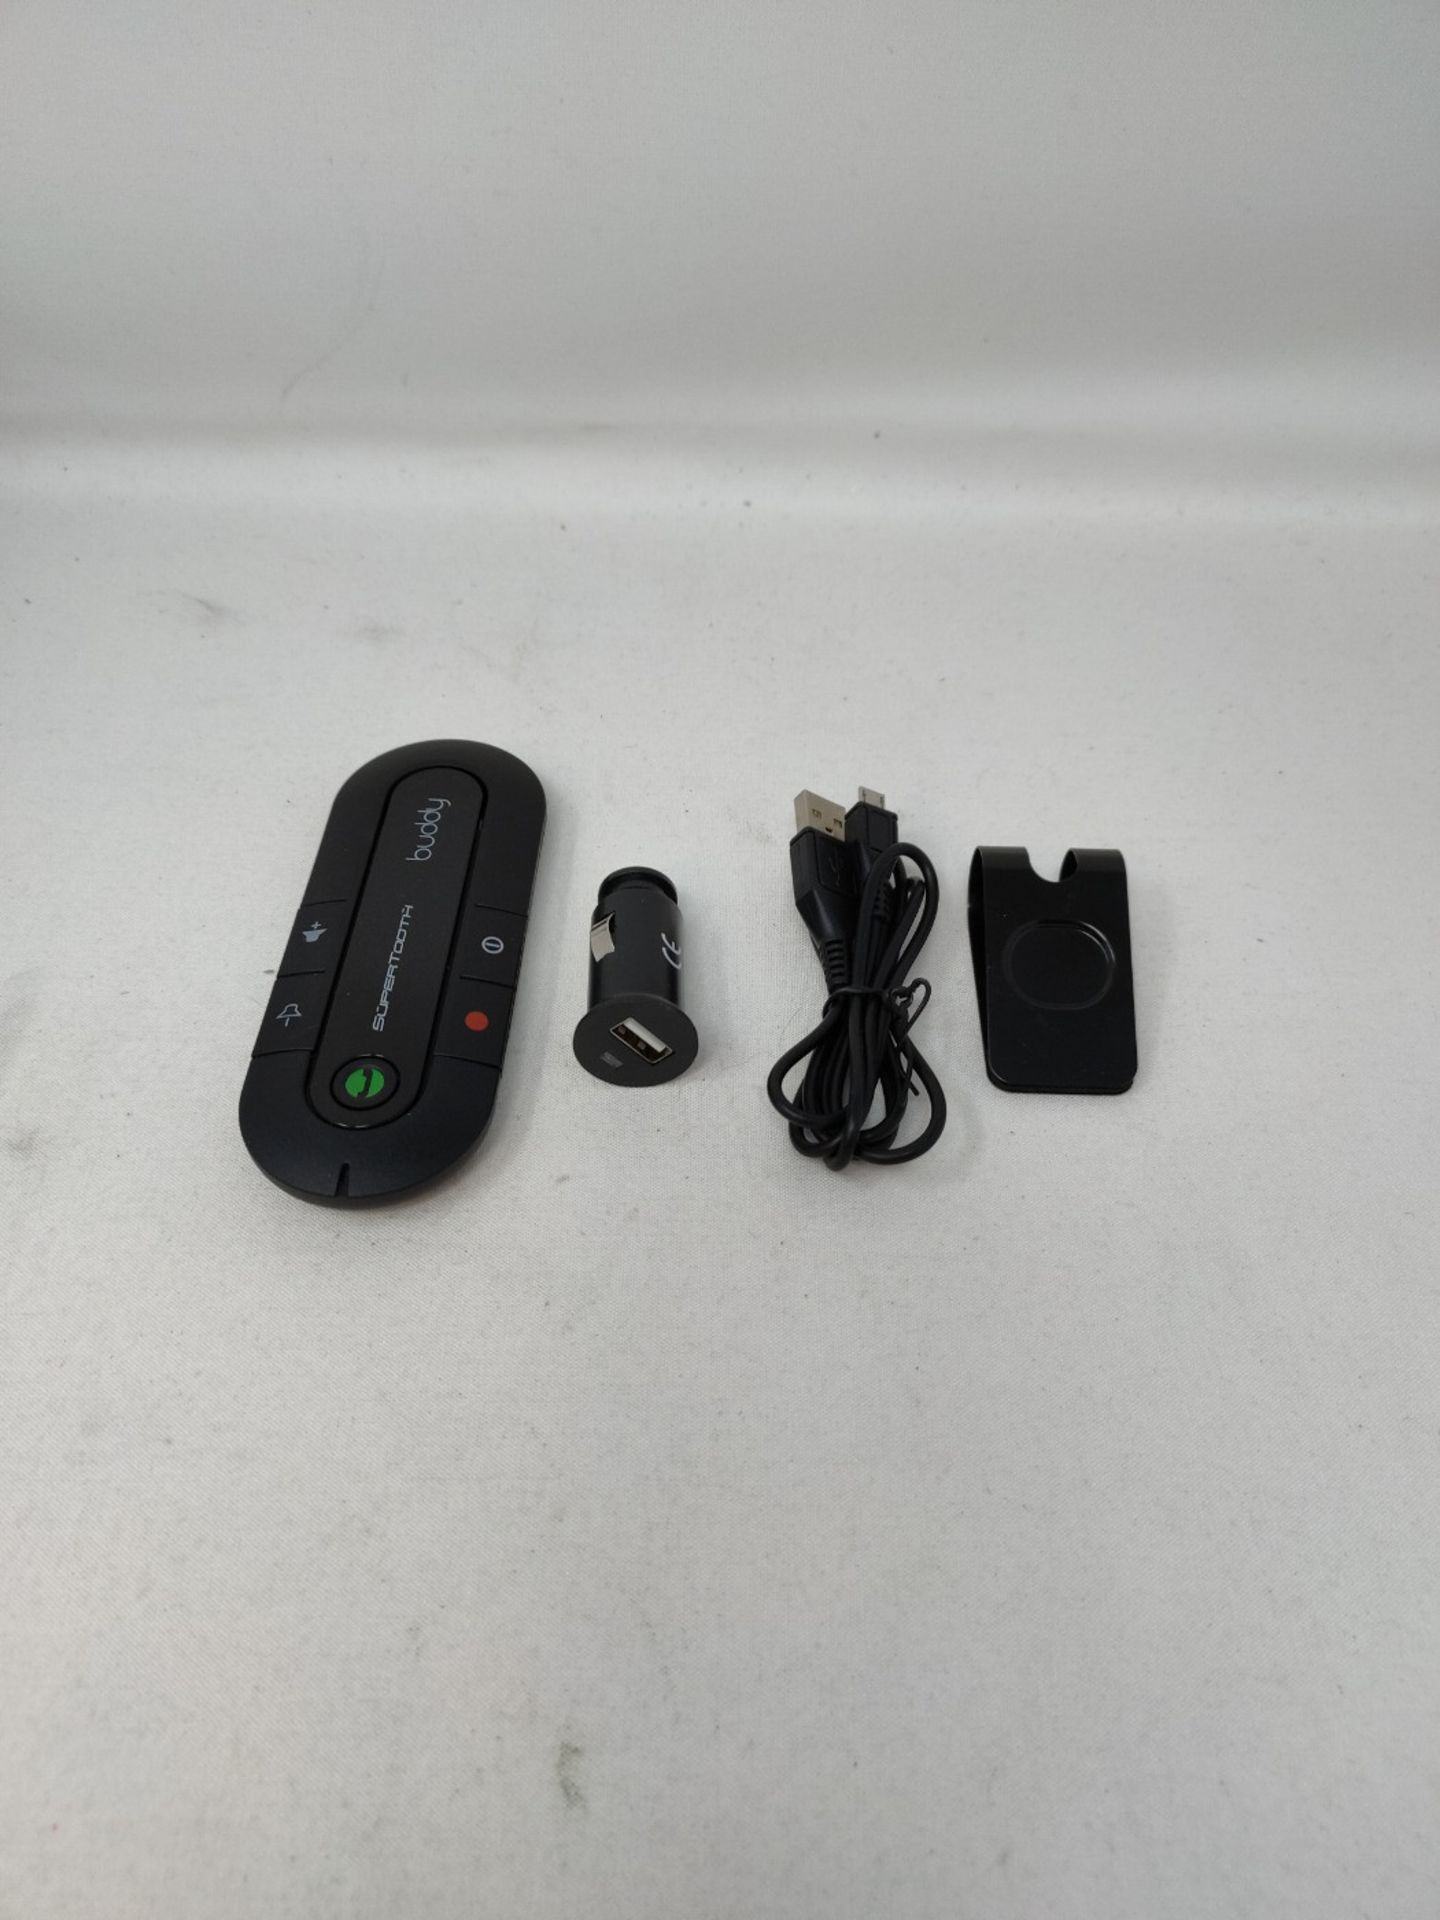 SuperTooth Kit-voiture mains libres Bluetooth pour pare-soleil Buddy - Noir - Image 3 of 3